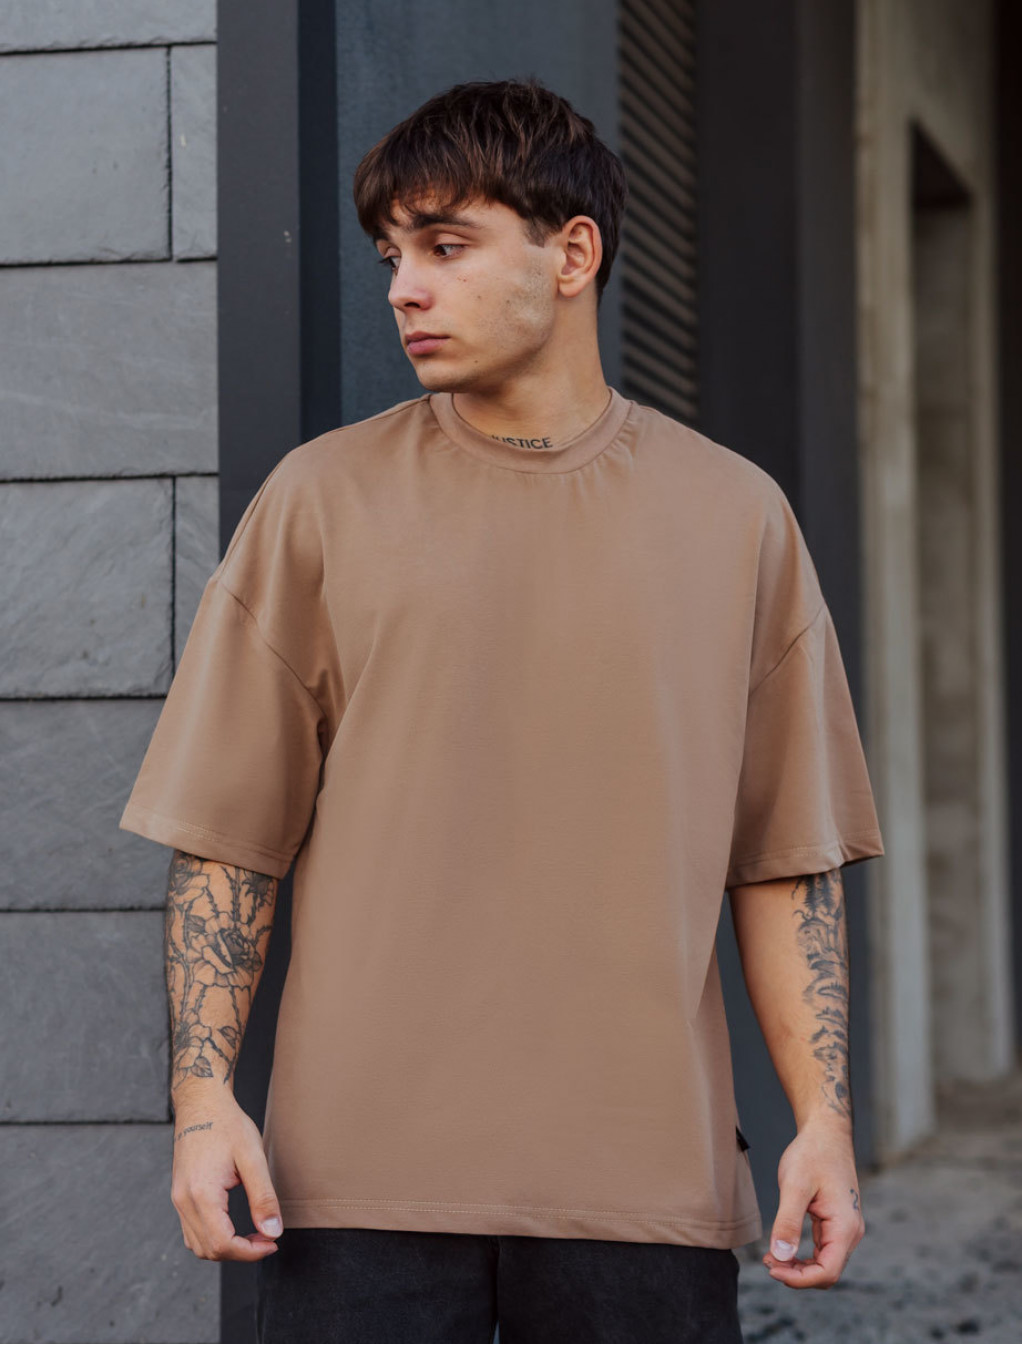 Koszulka Staff brown oversize basic